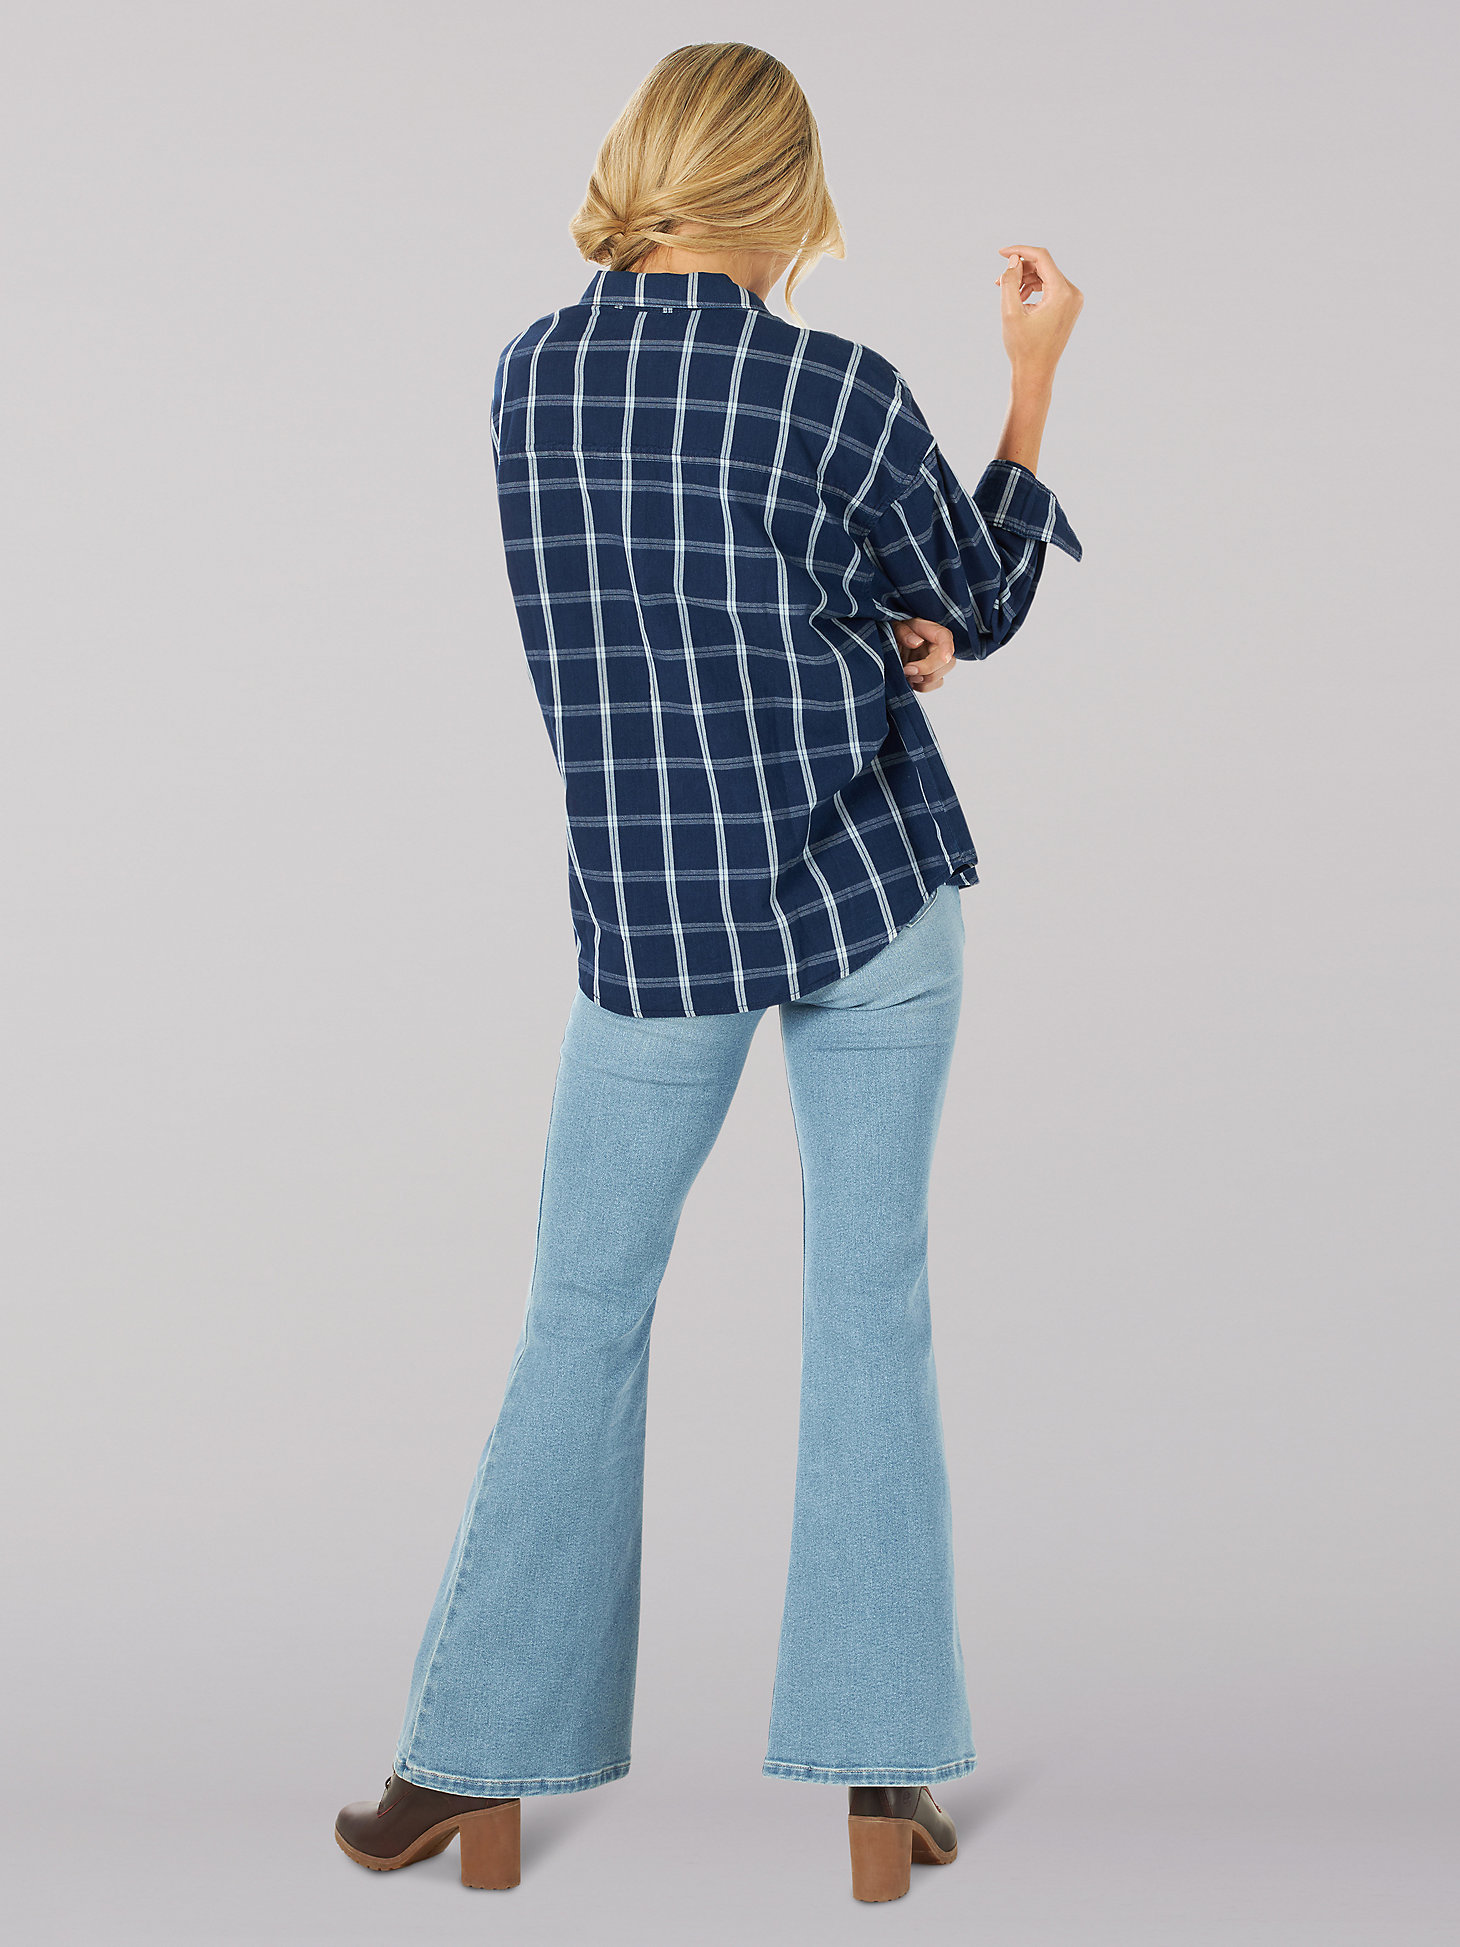 Women's Vintage Modern Frontier Classic Plaid Button Down Shirt in Blue Plaid alternative view 3